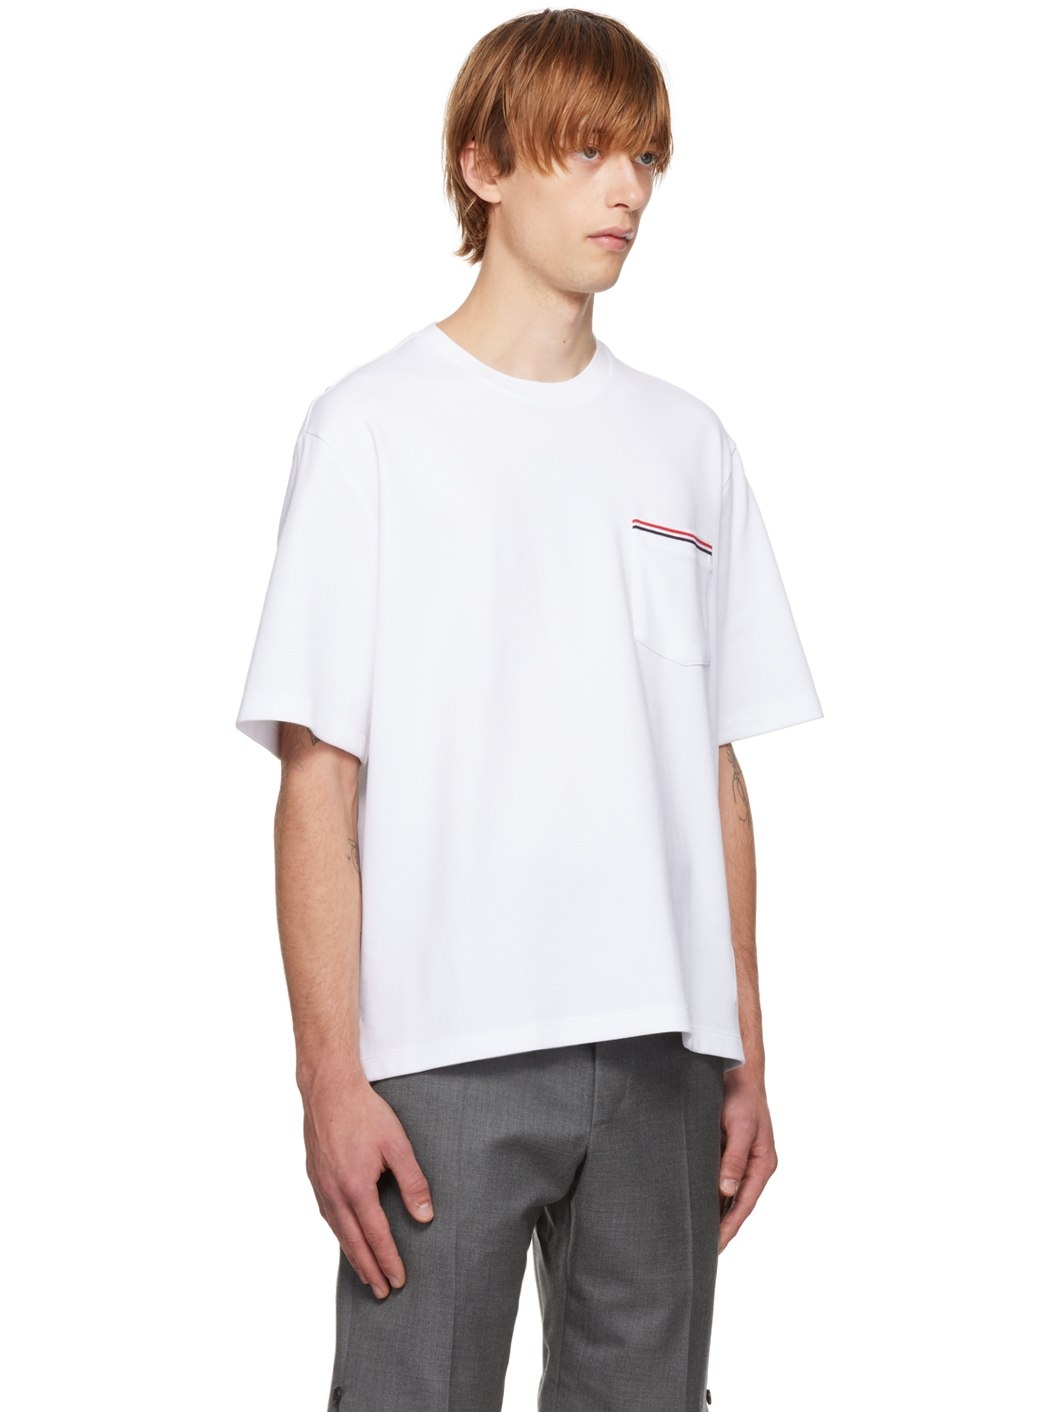 White Pocket T-Shirt - 2